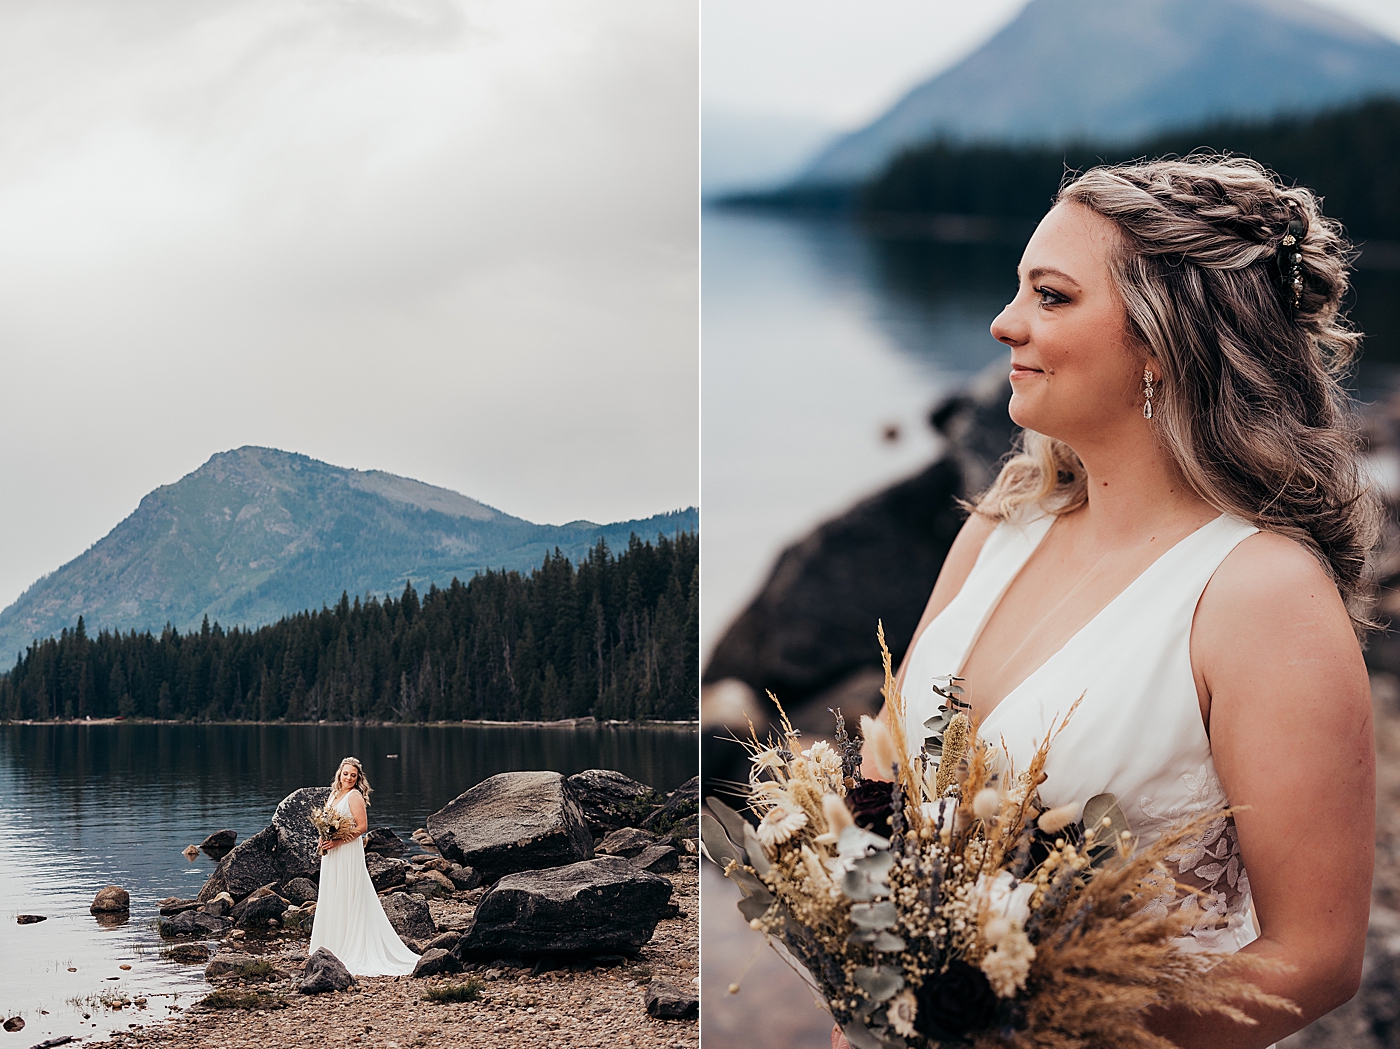 Bridal portraits at Lake Wenatchee in Leavenworth, WA. Photo by Megan Montalvo Photography.